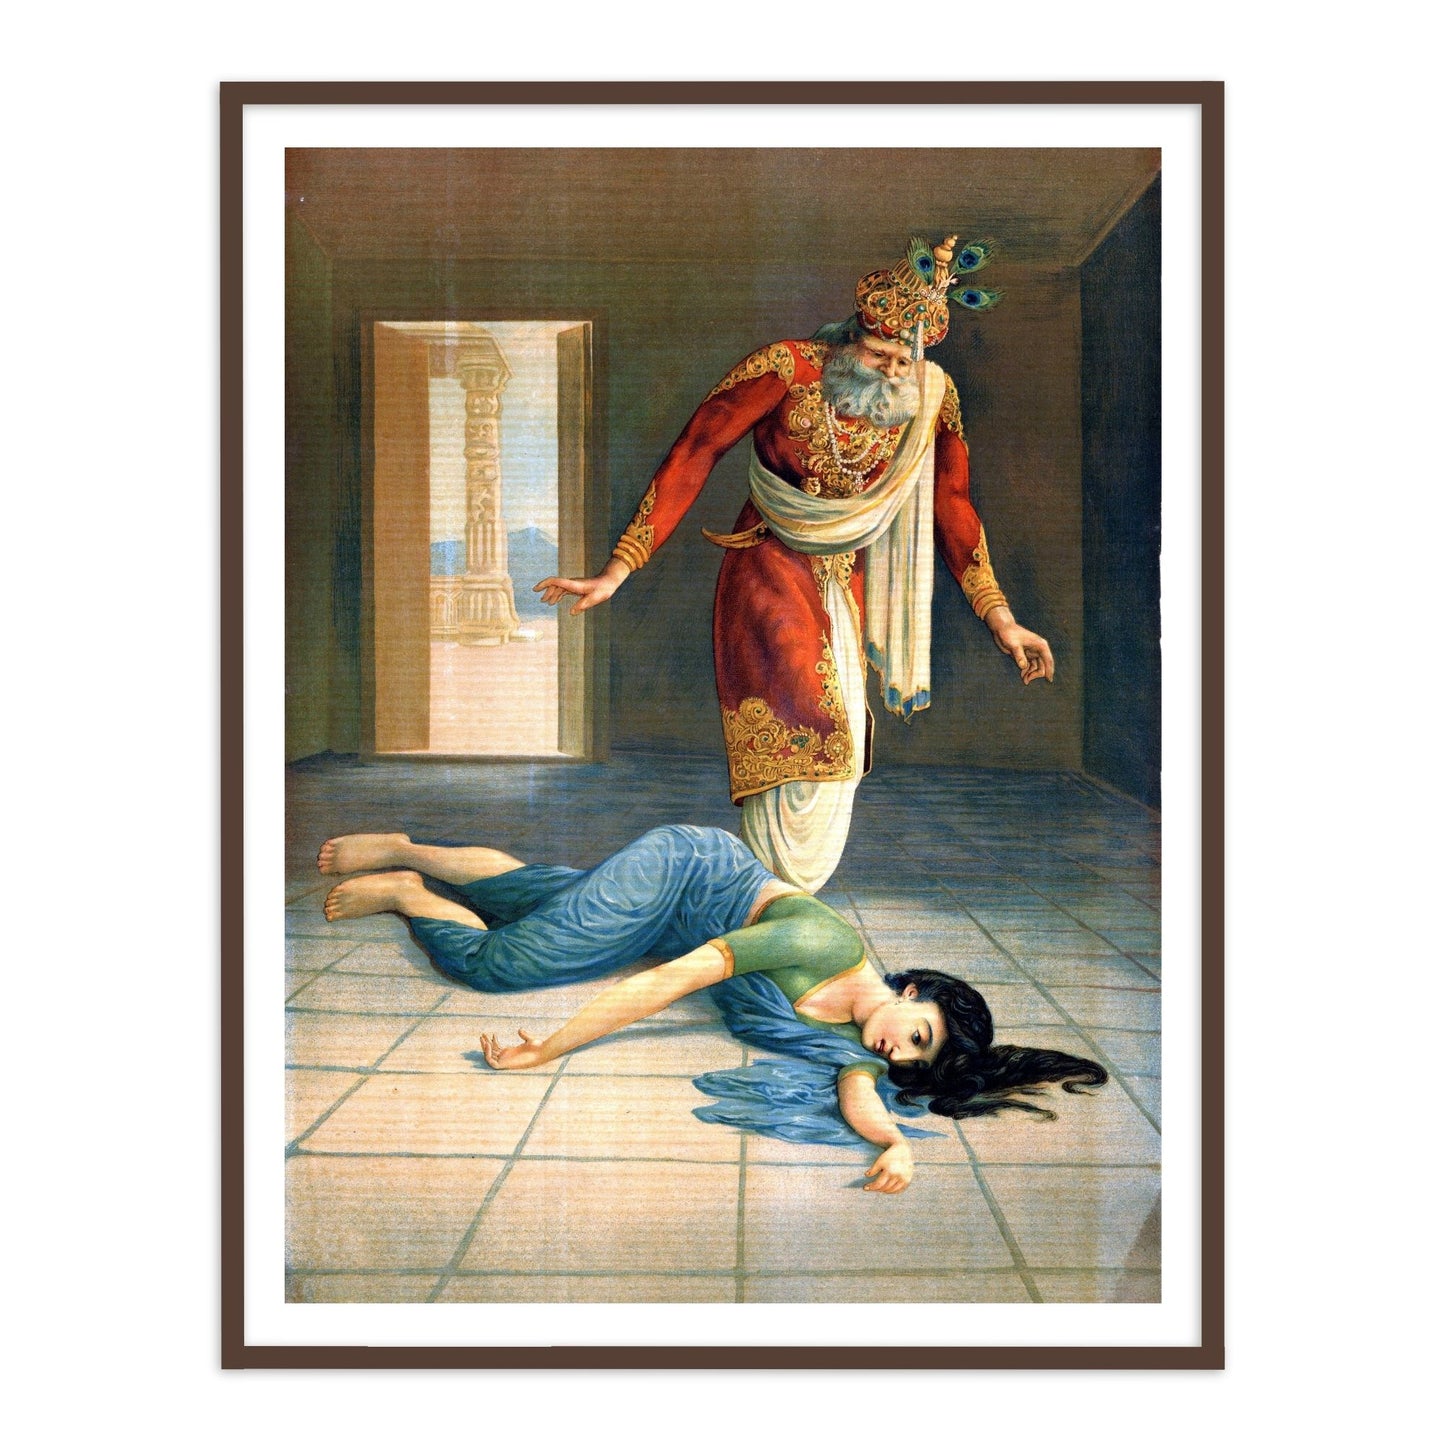 Kaikeyi demands that Dasharatha banish Rama from Ayodhya by Raja Ravi Varma Wall Art